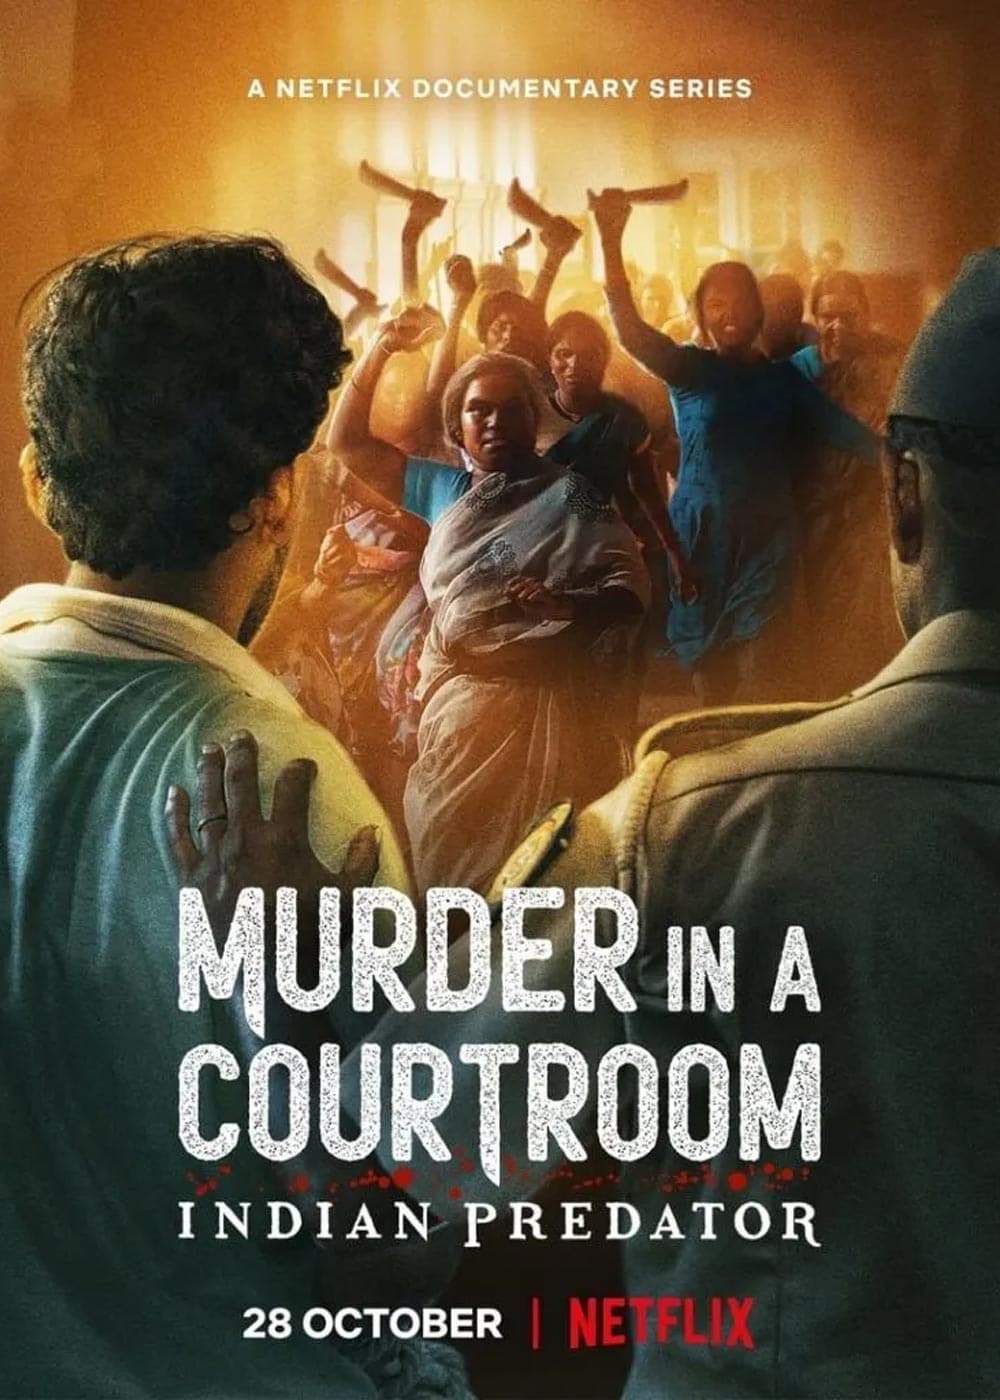 Indian Predator: Murder in a Courtroom - S01 (Eng + Mala + Hin + Tam + Tel + Kan)